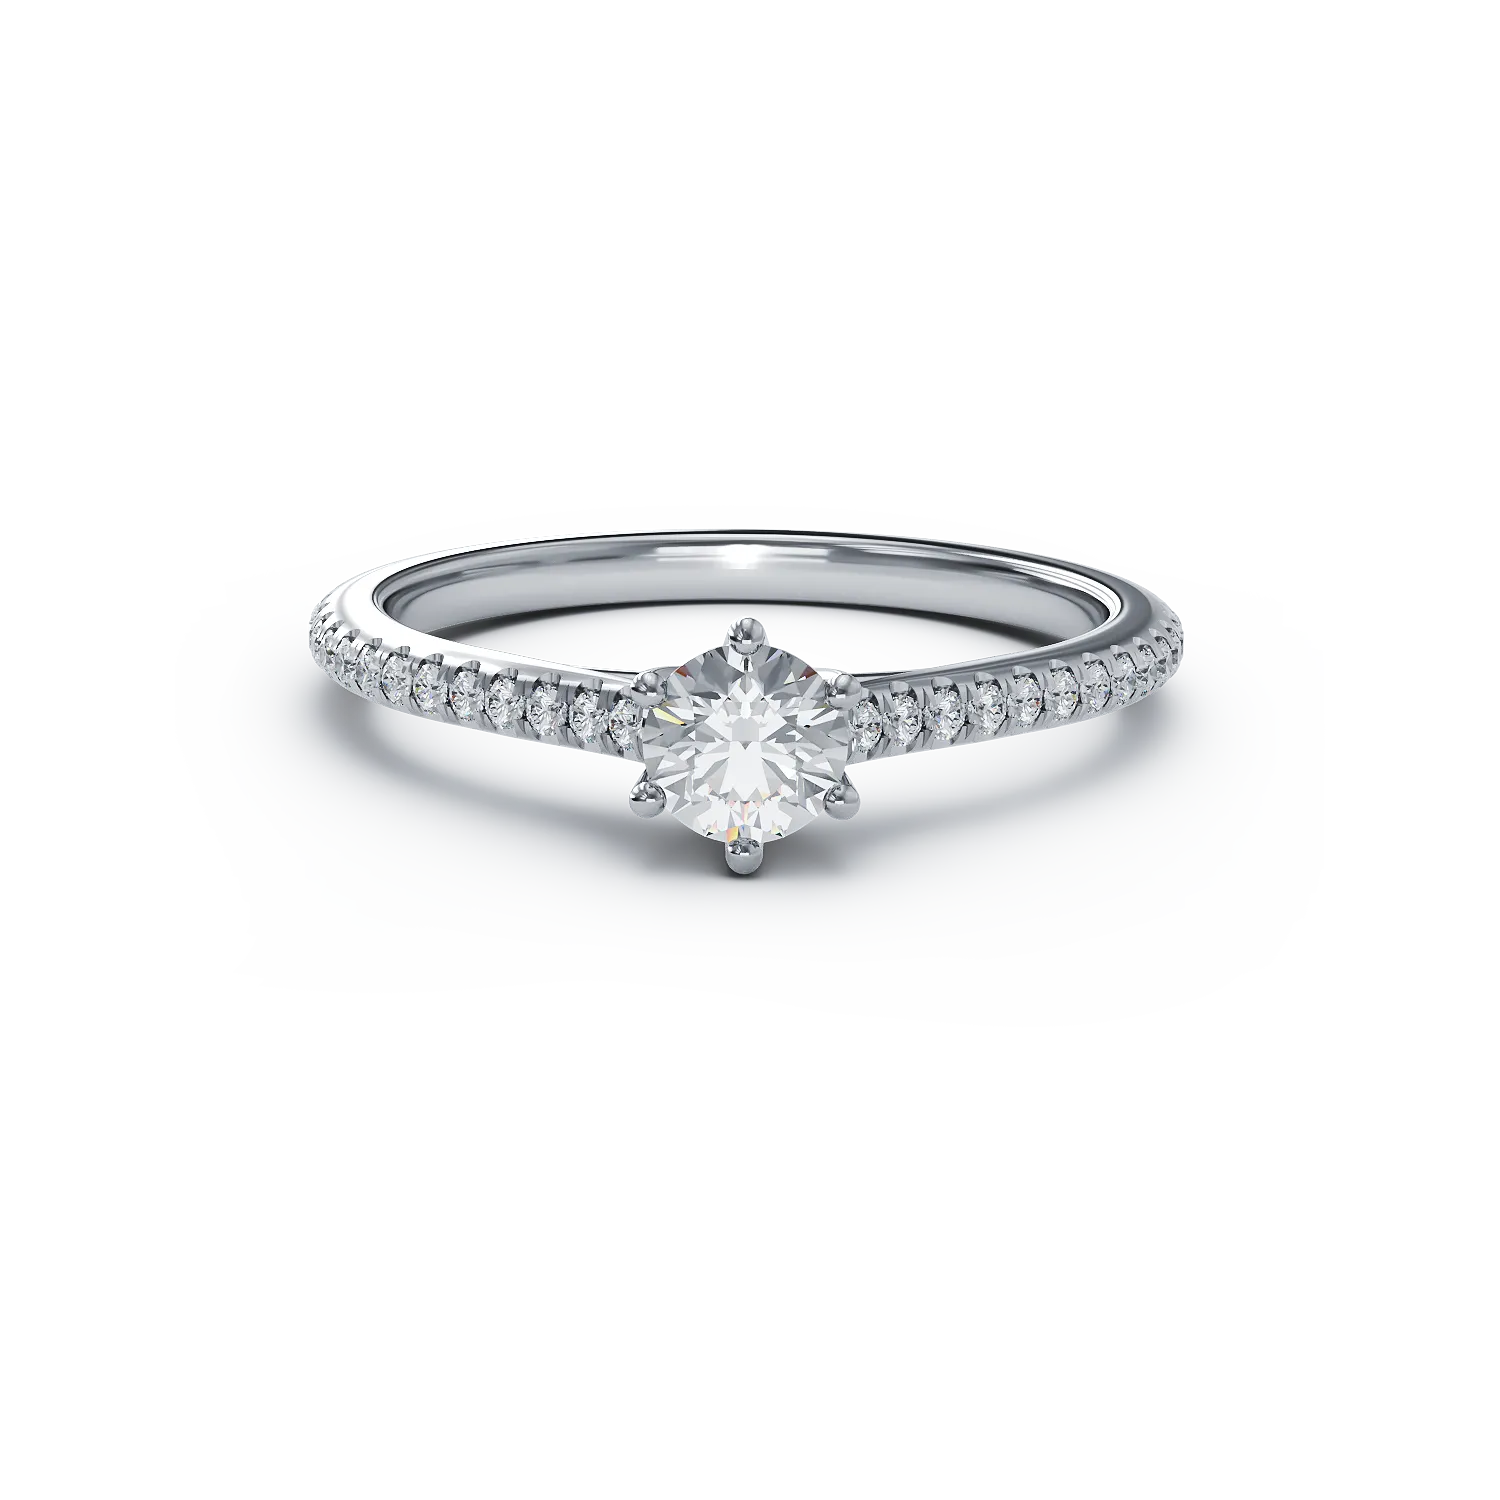 Platinum engagement ring with 0.31ct diamond and 0.17ct diamonds